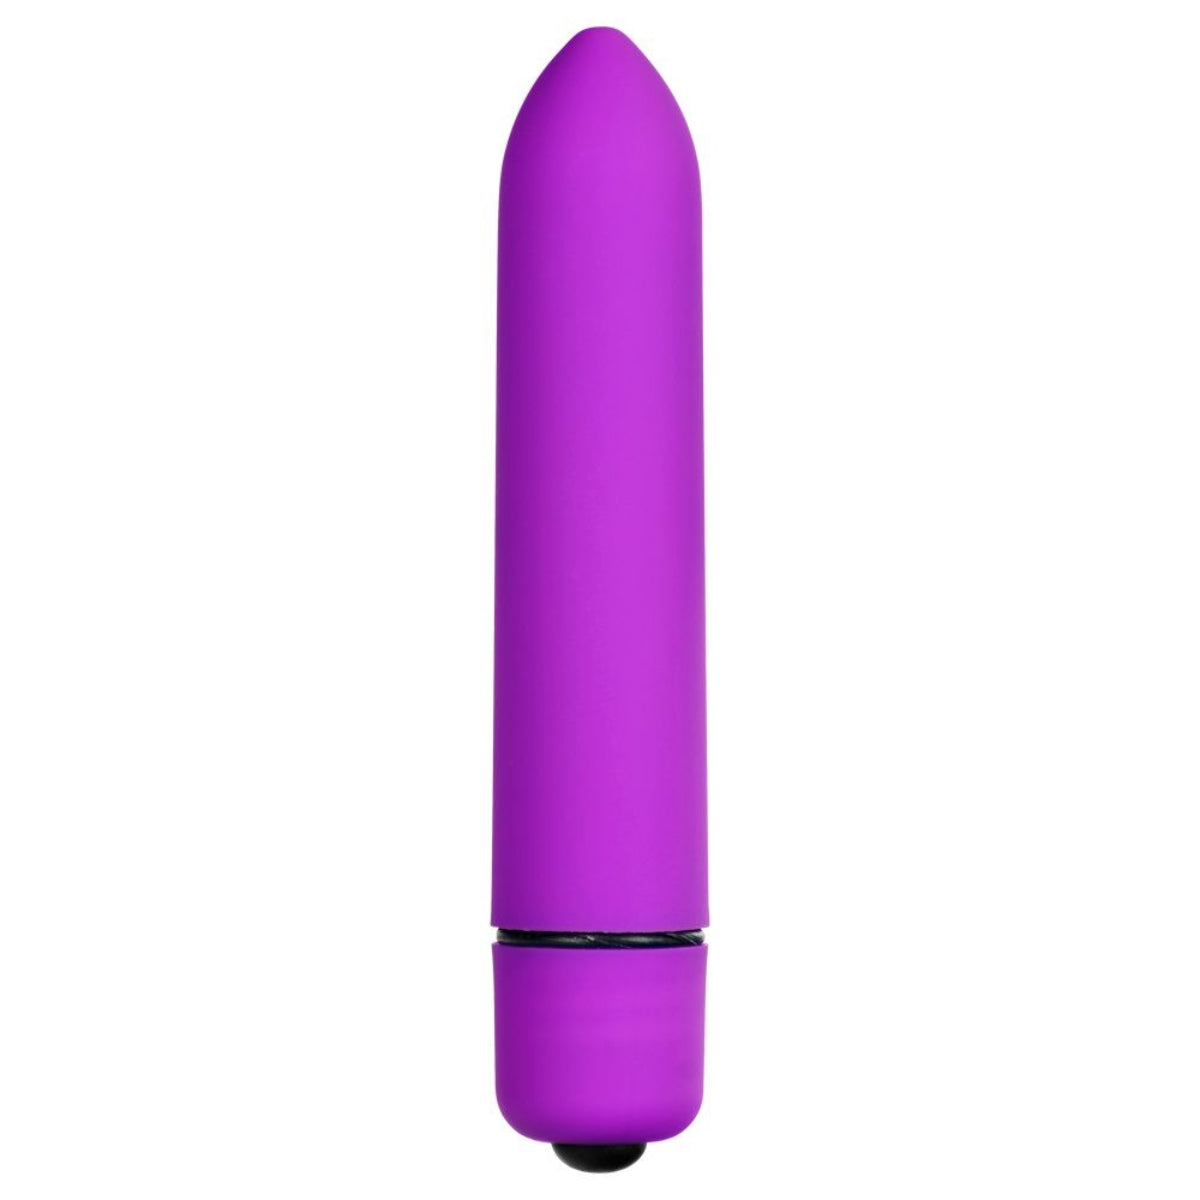 Me You Us Blossom 10 Mode Bullet Vibrator Purple - Simply Pleasure